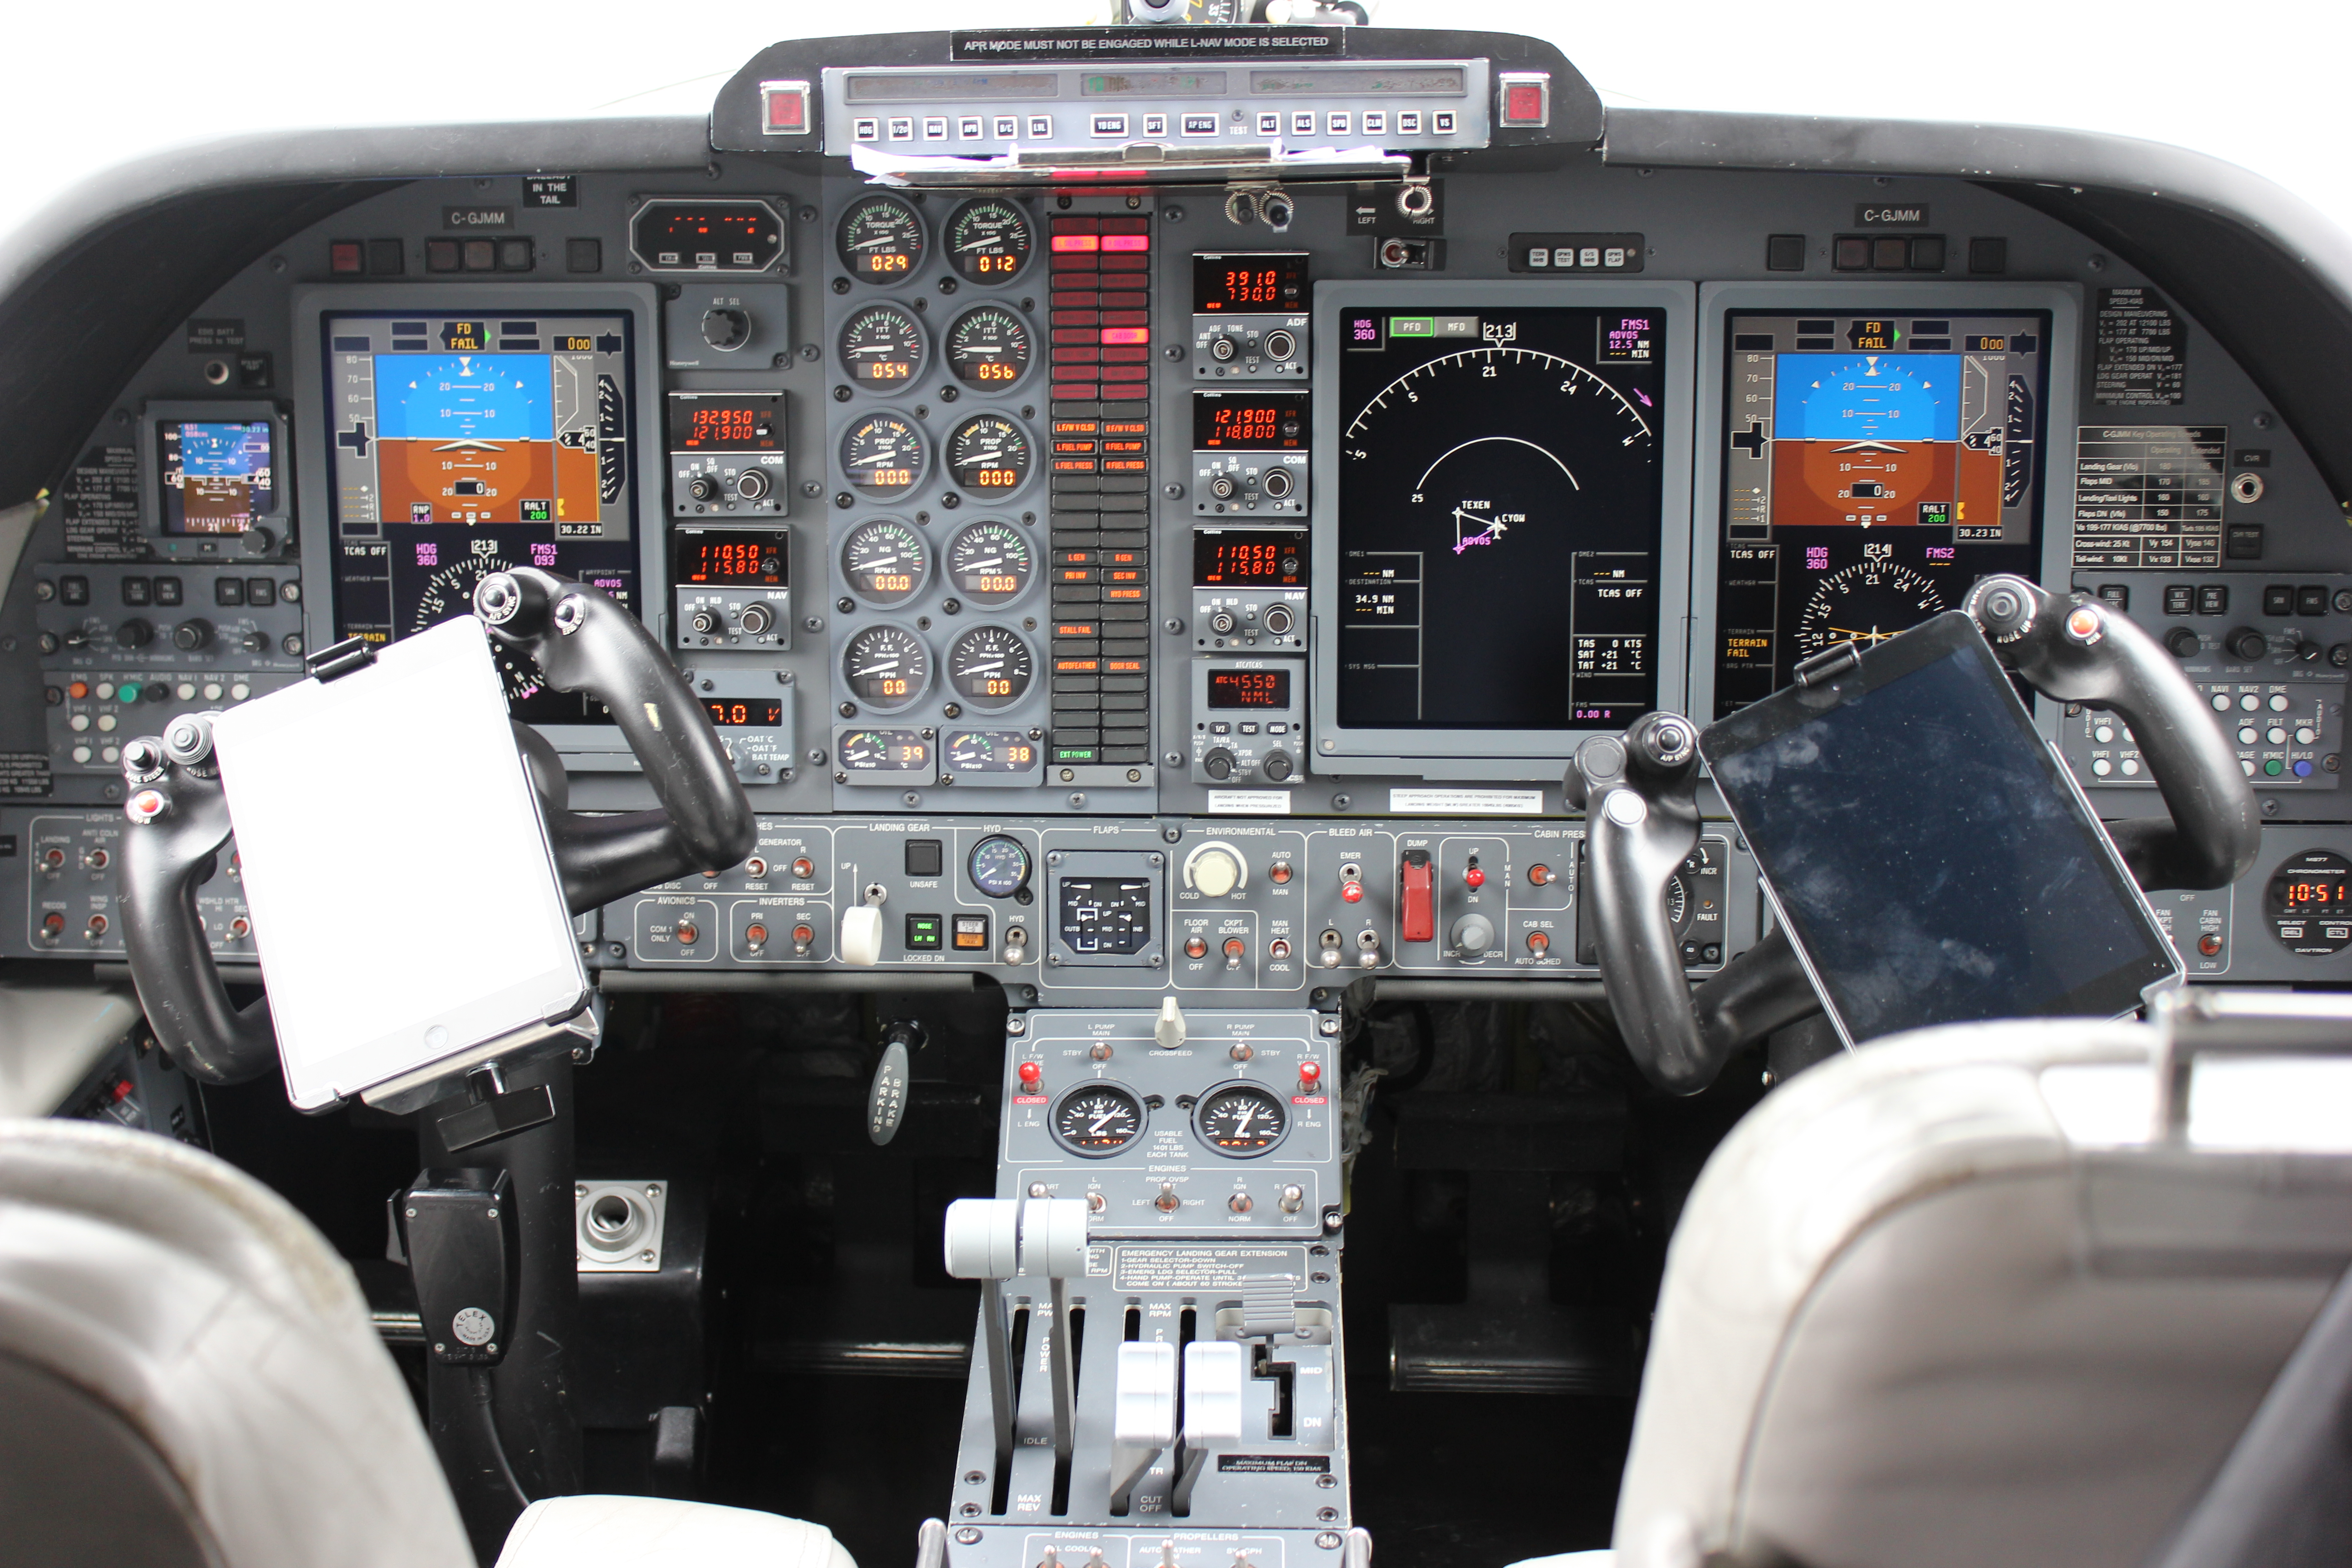 The Avanti cockpit